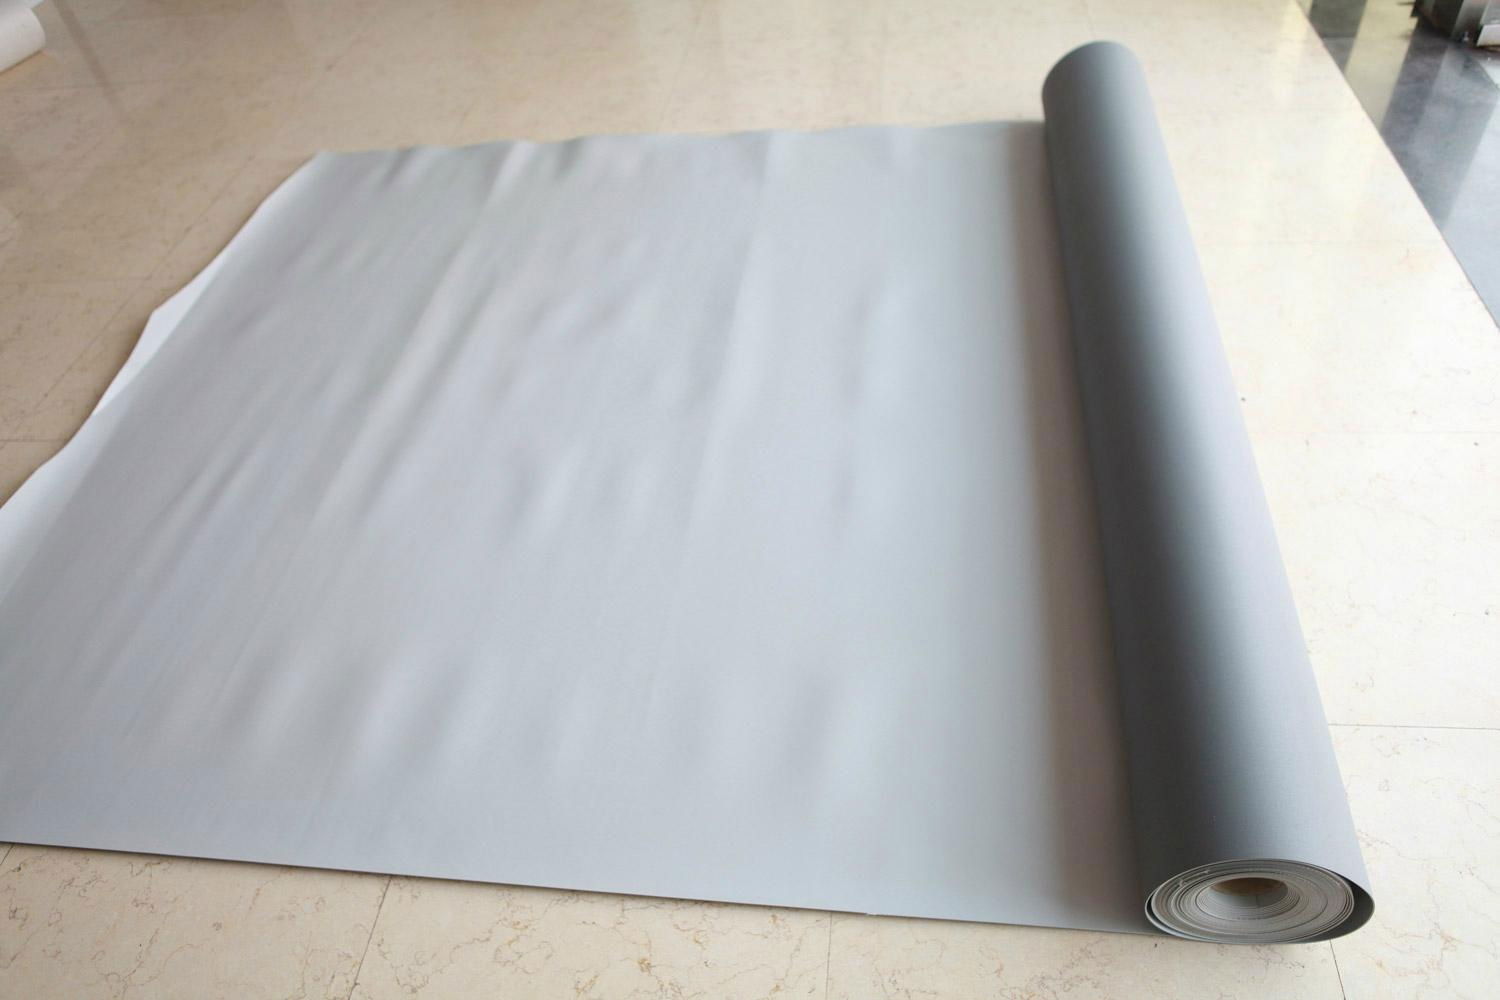 PVC Waterproof Membrane 3